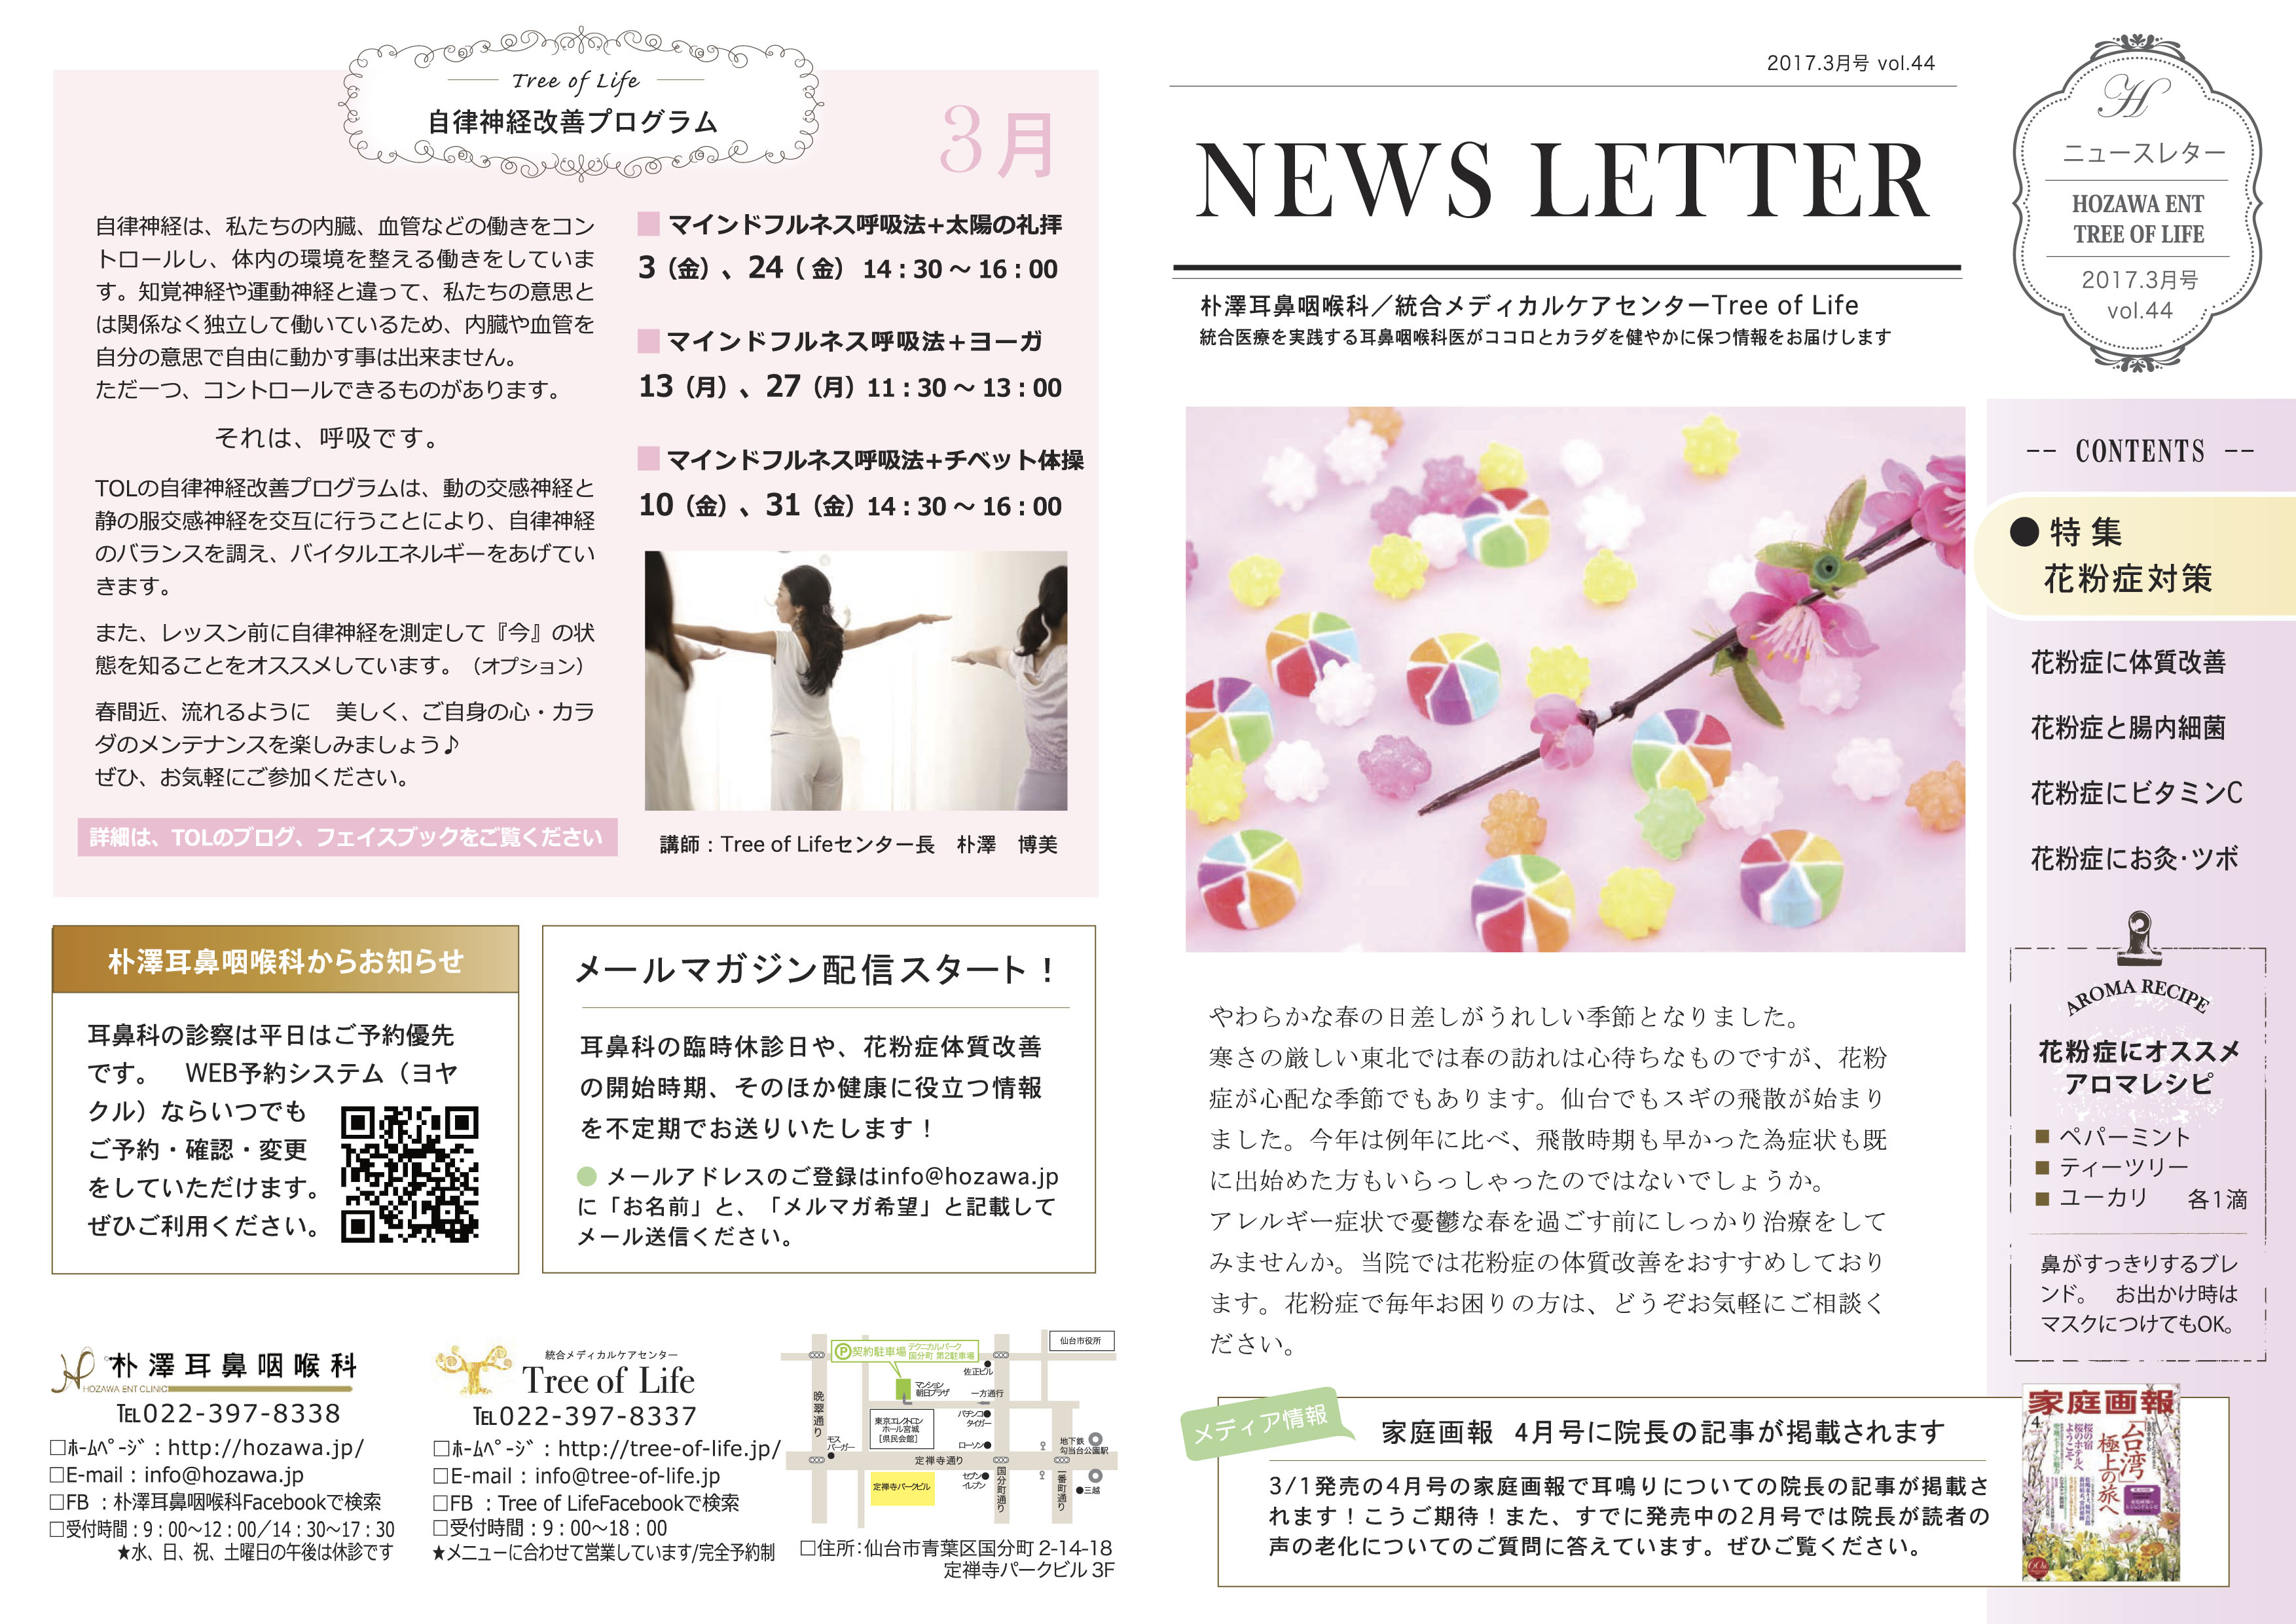 http://hozawa.jp/news/news_img/1702274894_01L-1.jpg